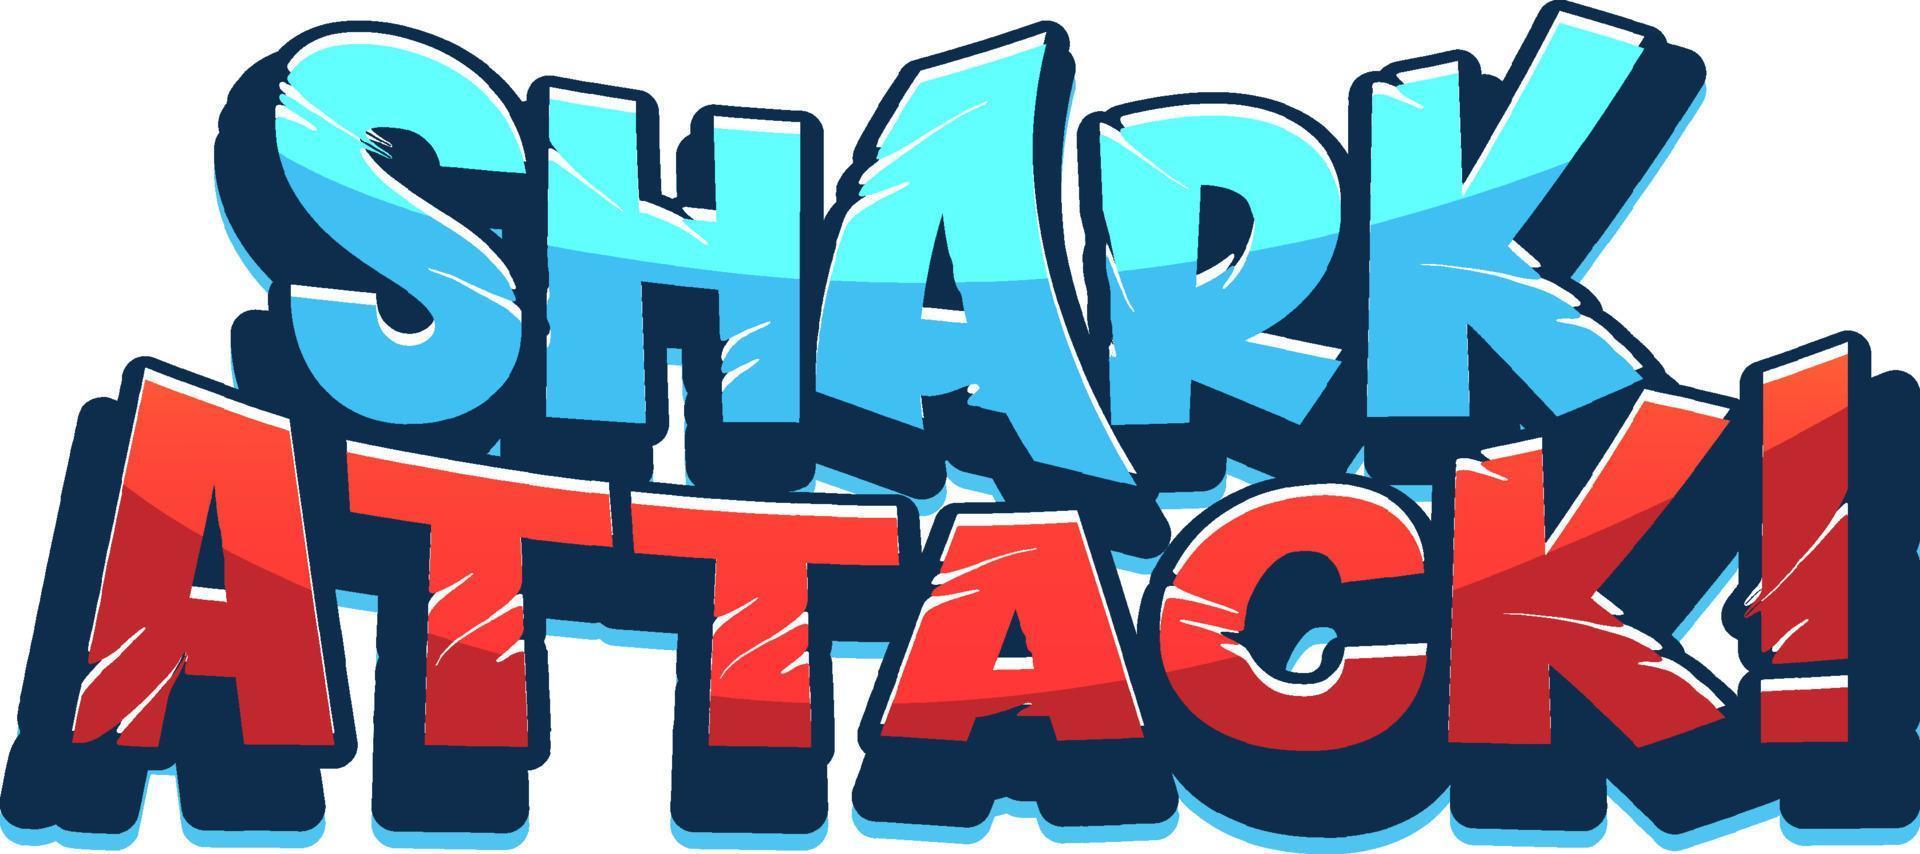 Font design for shark attack vector